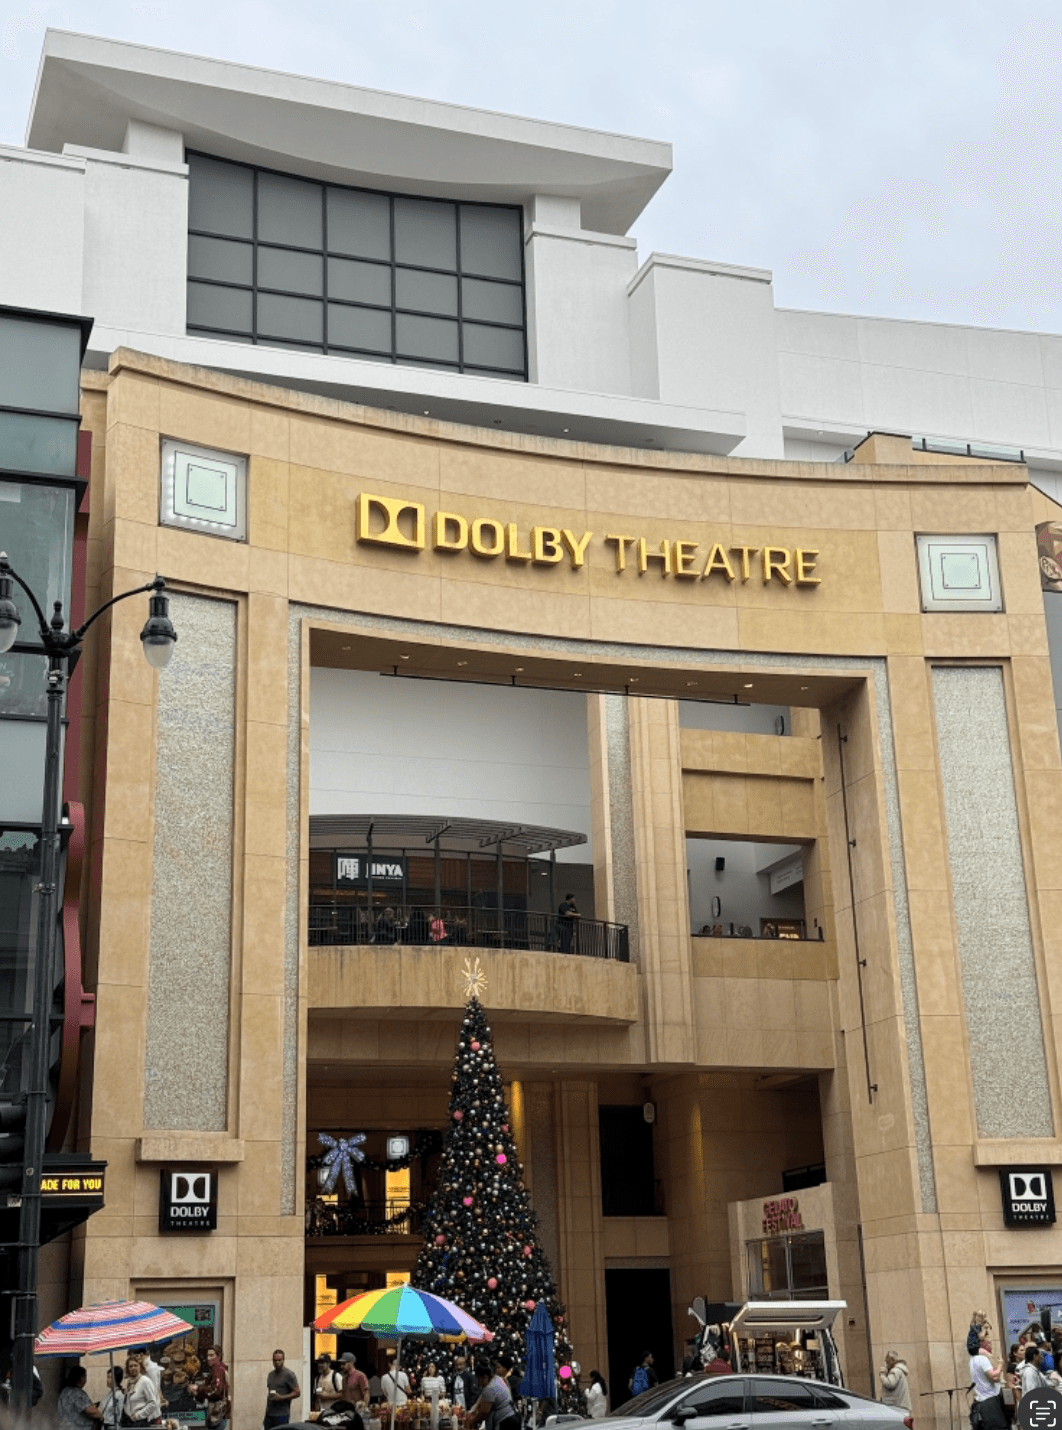 好萊塢星光大道Walk of Fame
中國劇院TCL Chinese Theatre
好萊塢高地中心（Hollywood & Highland Center）
杜比戲院 Dolby Theatre